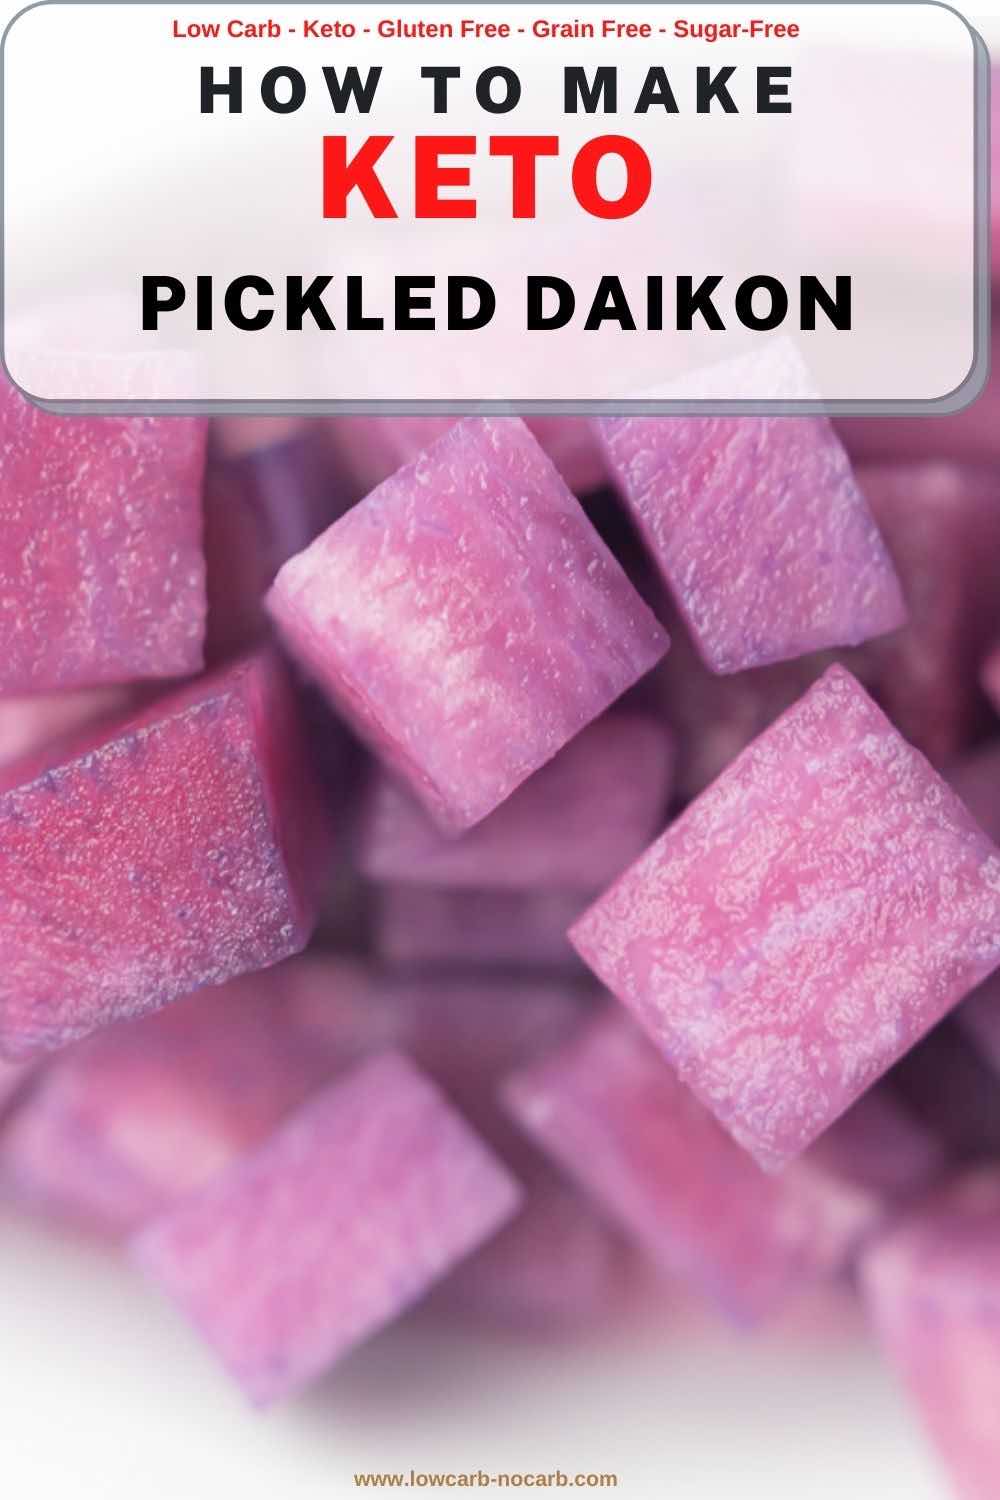 How to make keto pickled daikon.